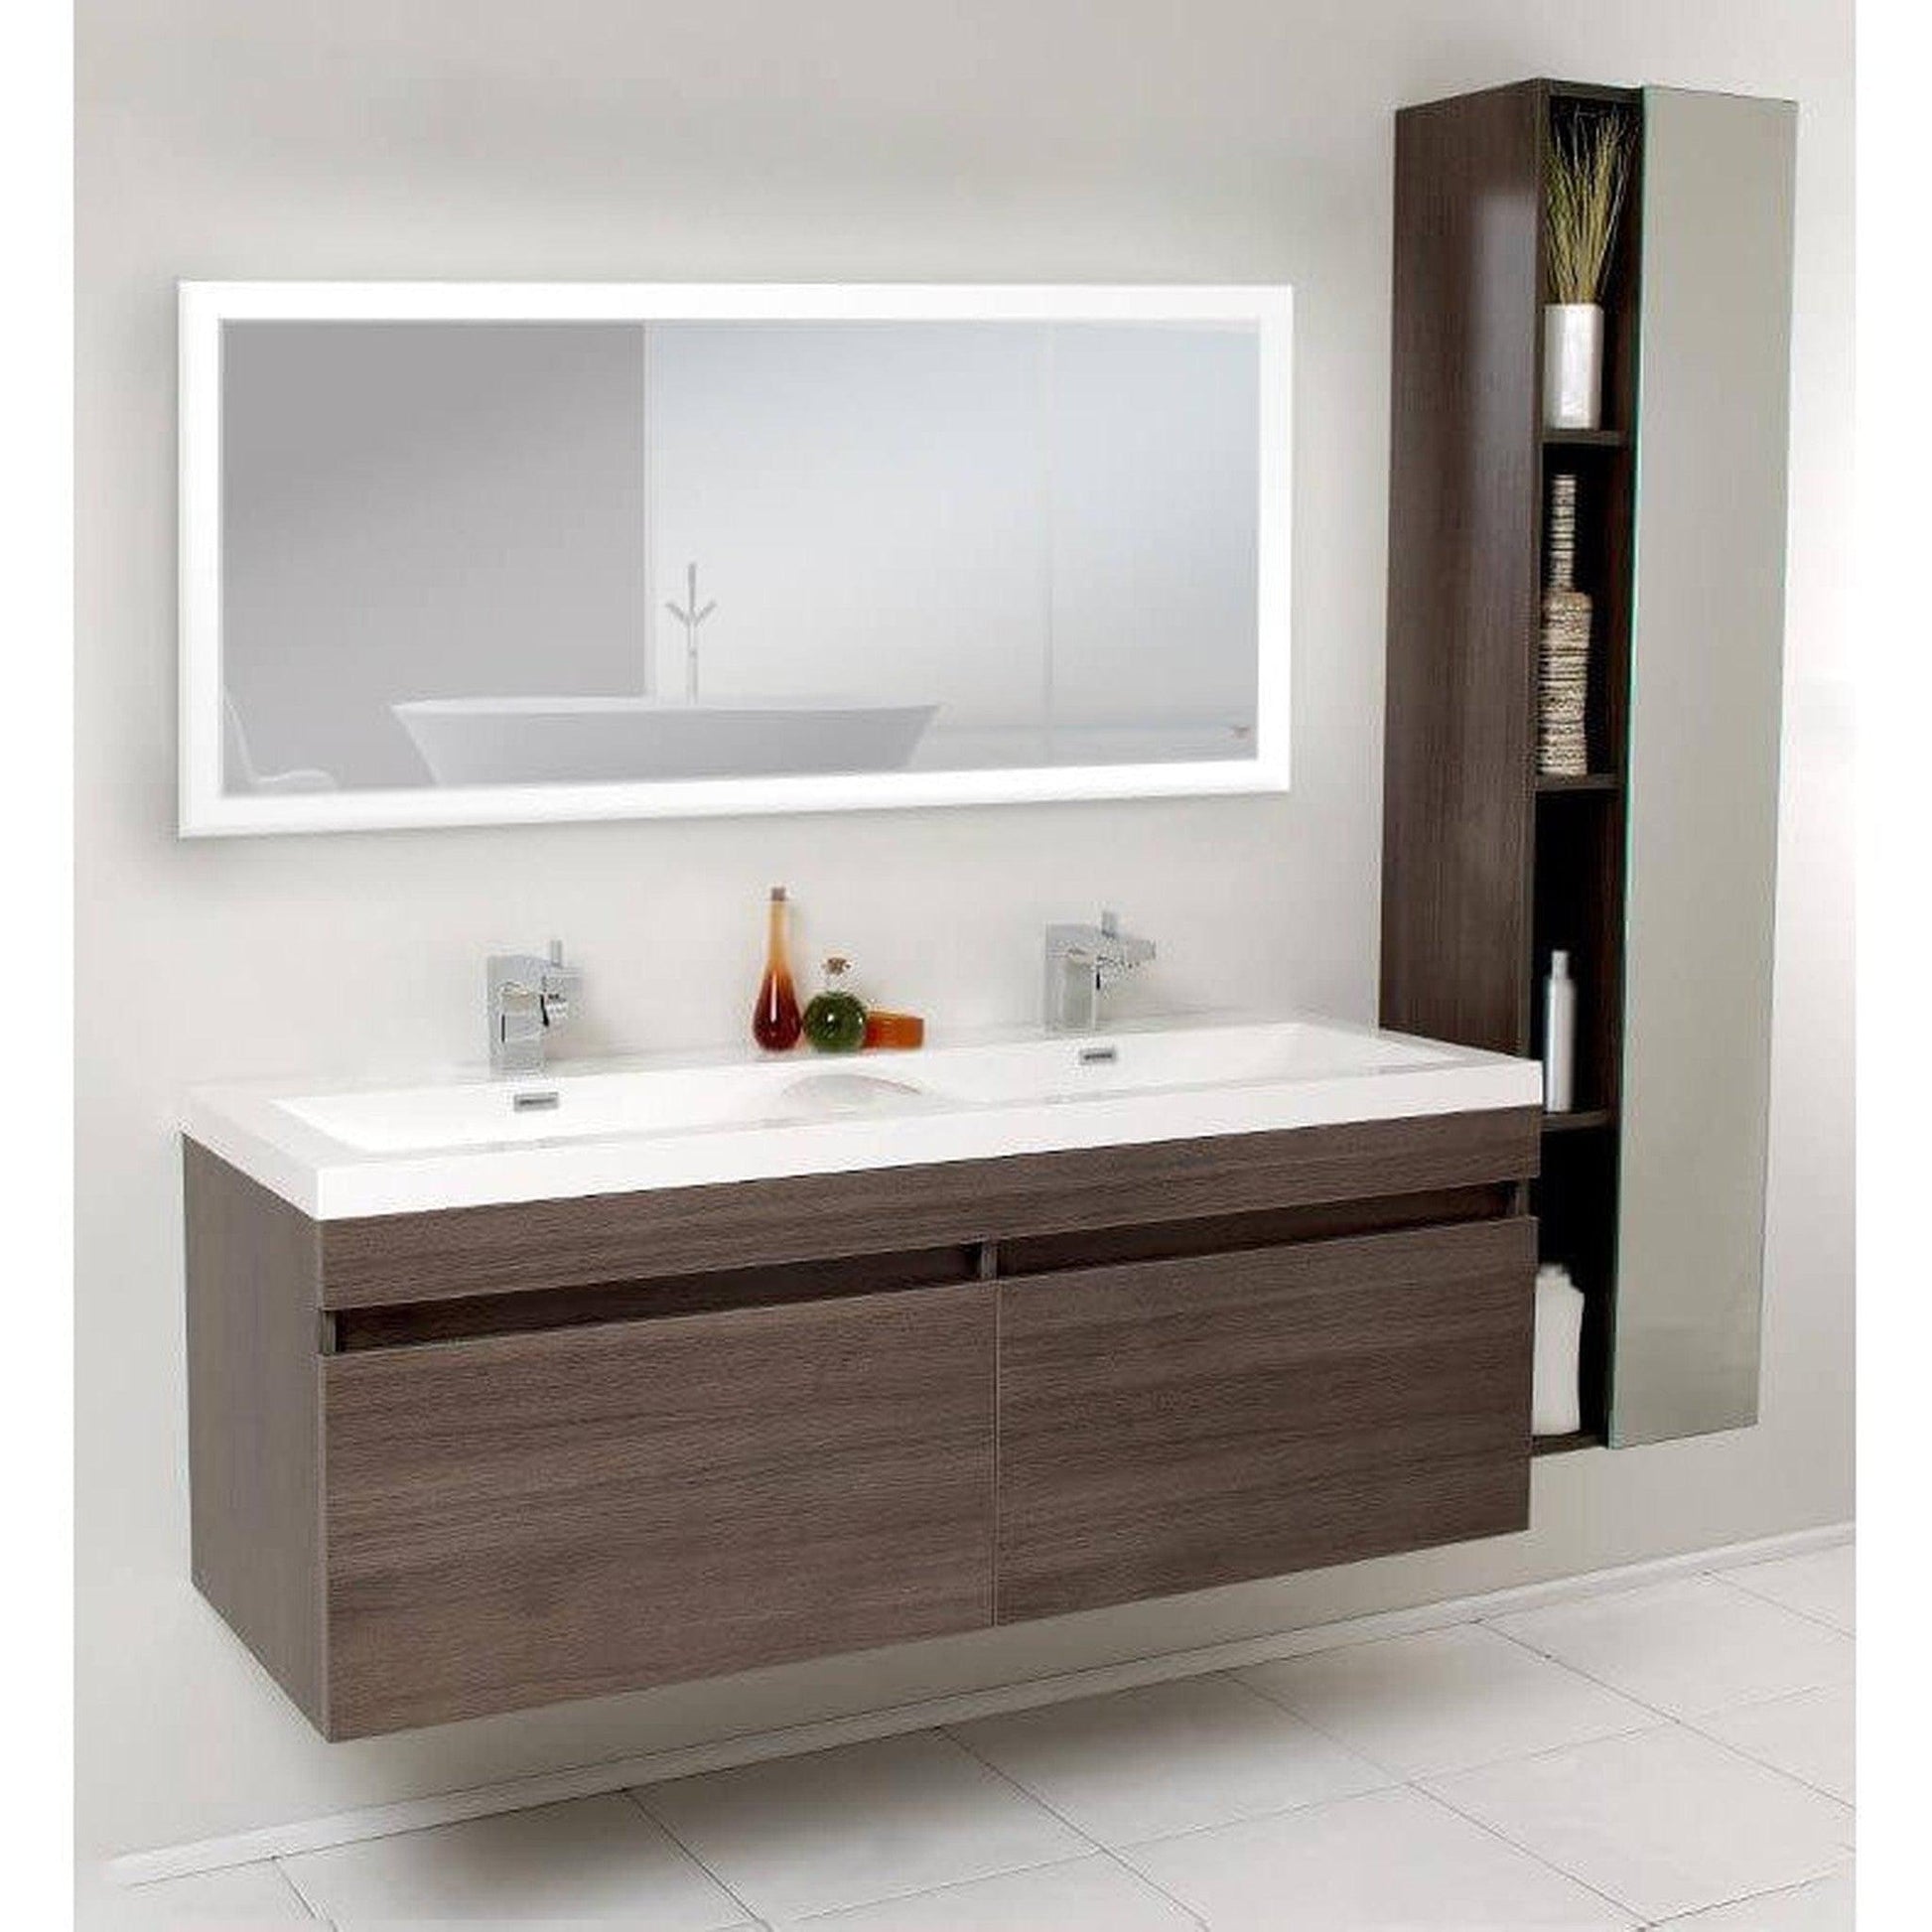 Castello USA Angelina 60" x 30" LED Bathroom Mirror With On/Off Sensor